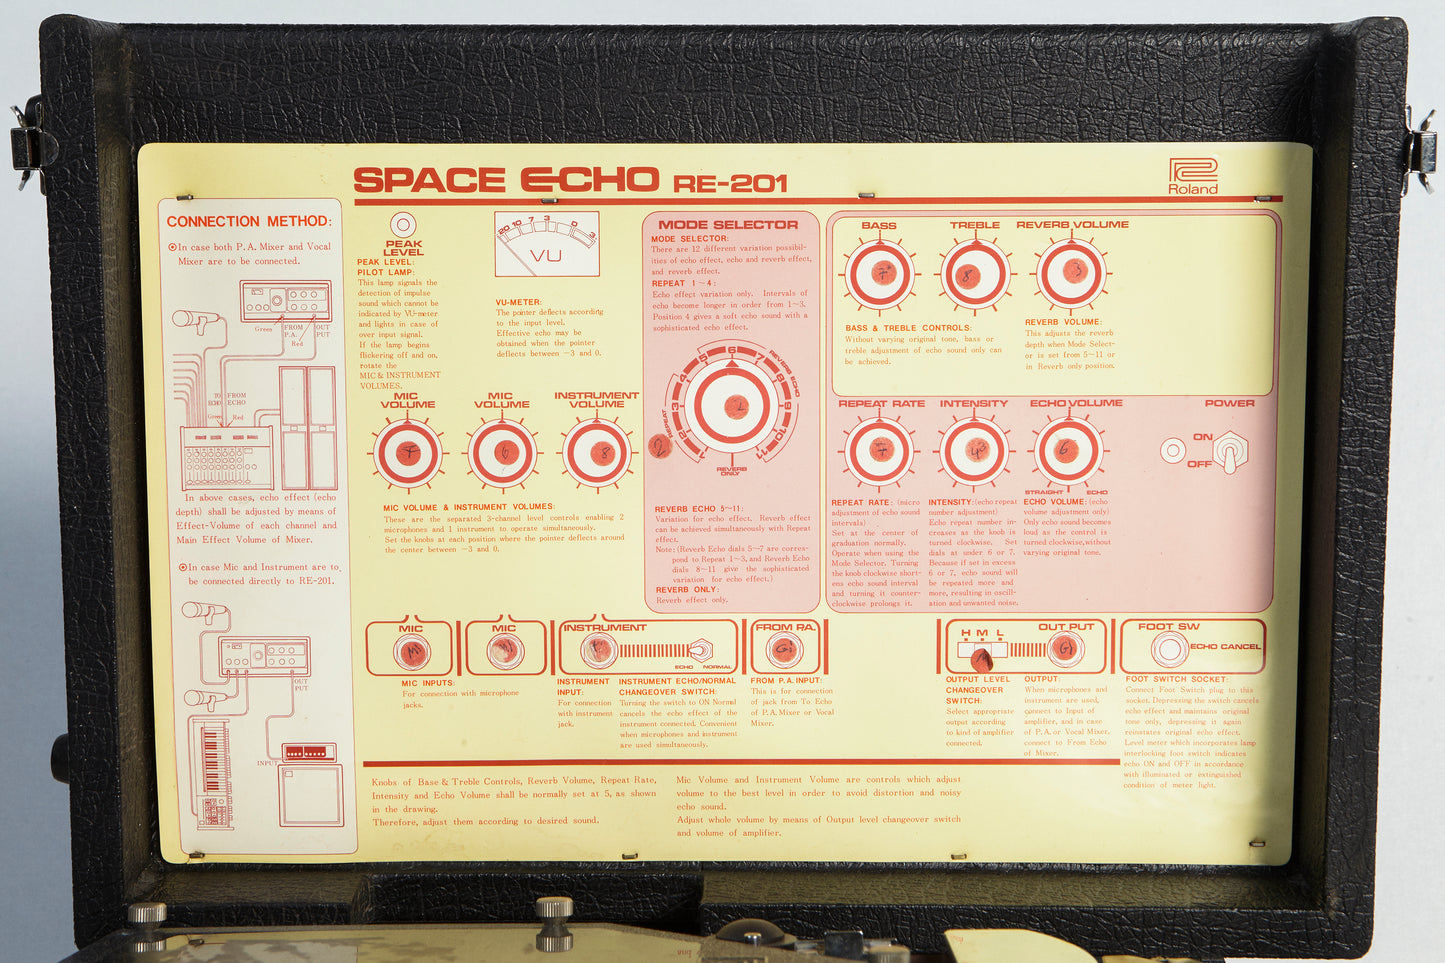 RE-201 SPACE ECHO